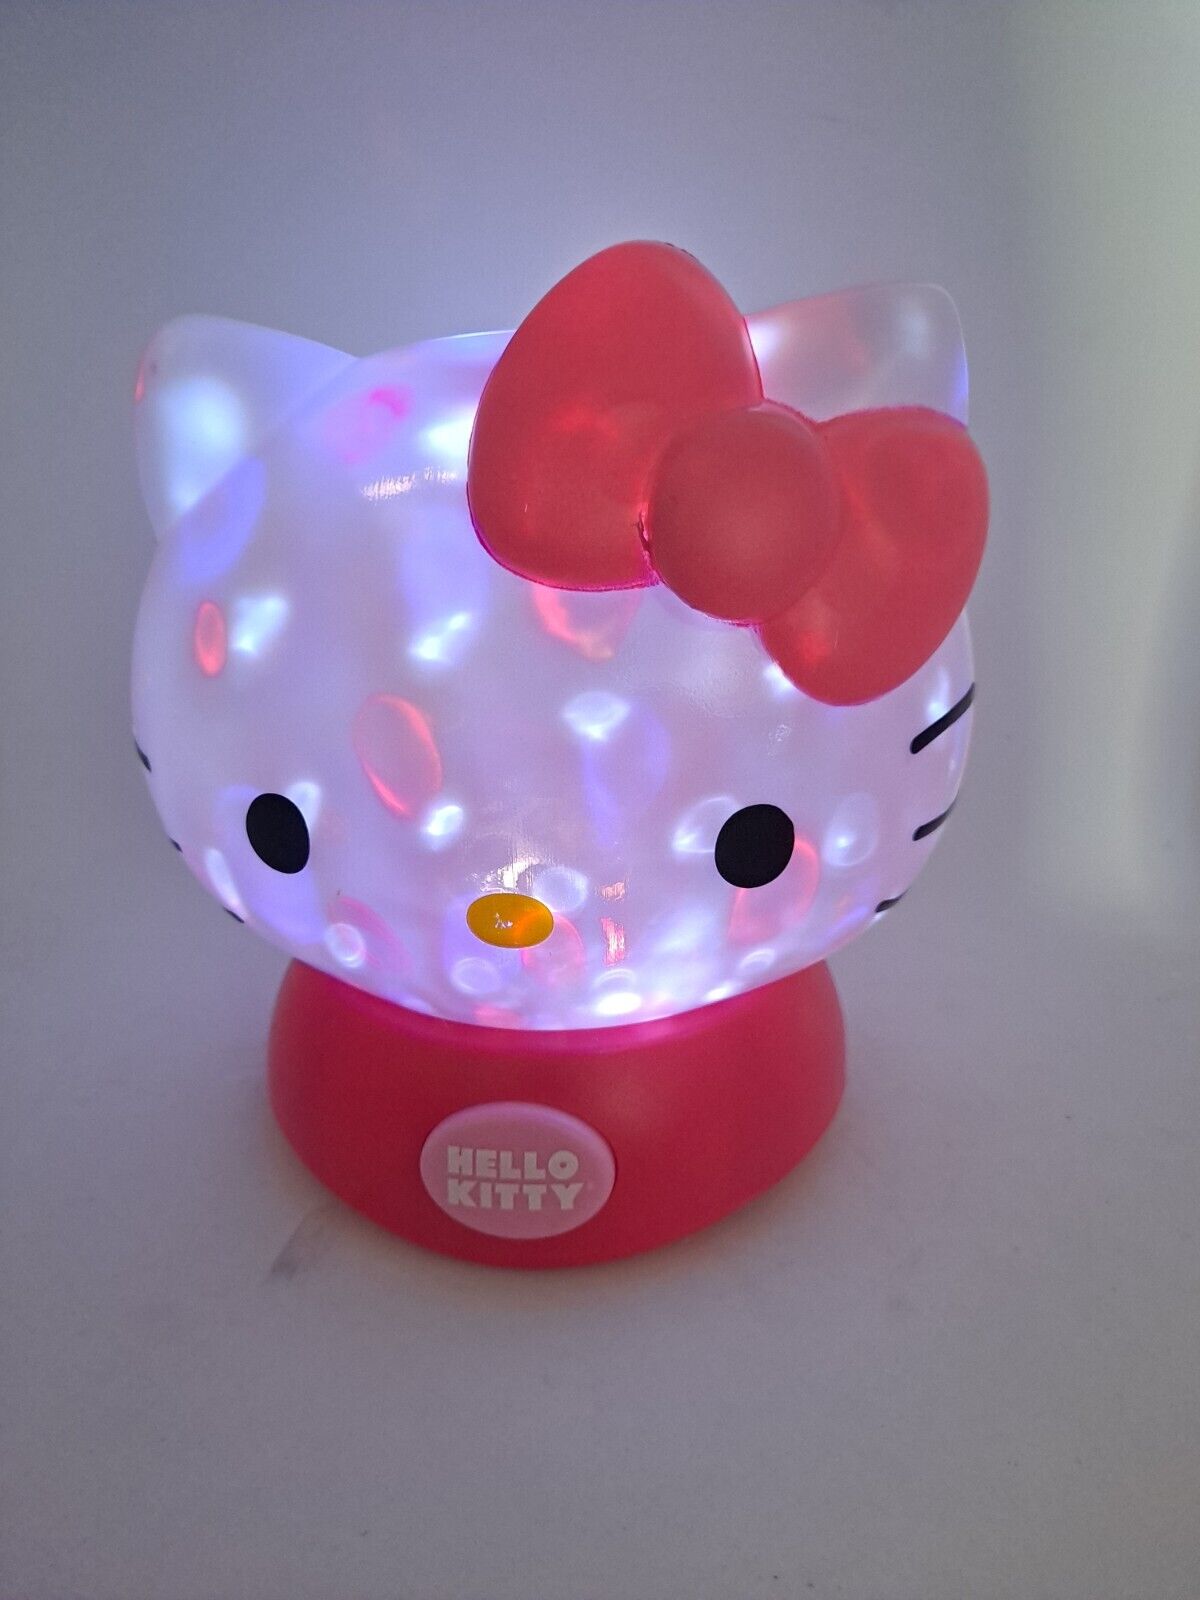 Sanrio Hello Kitty Battery Operated Night Light (2013) Tech 4 Kids Inc.